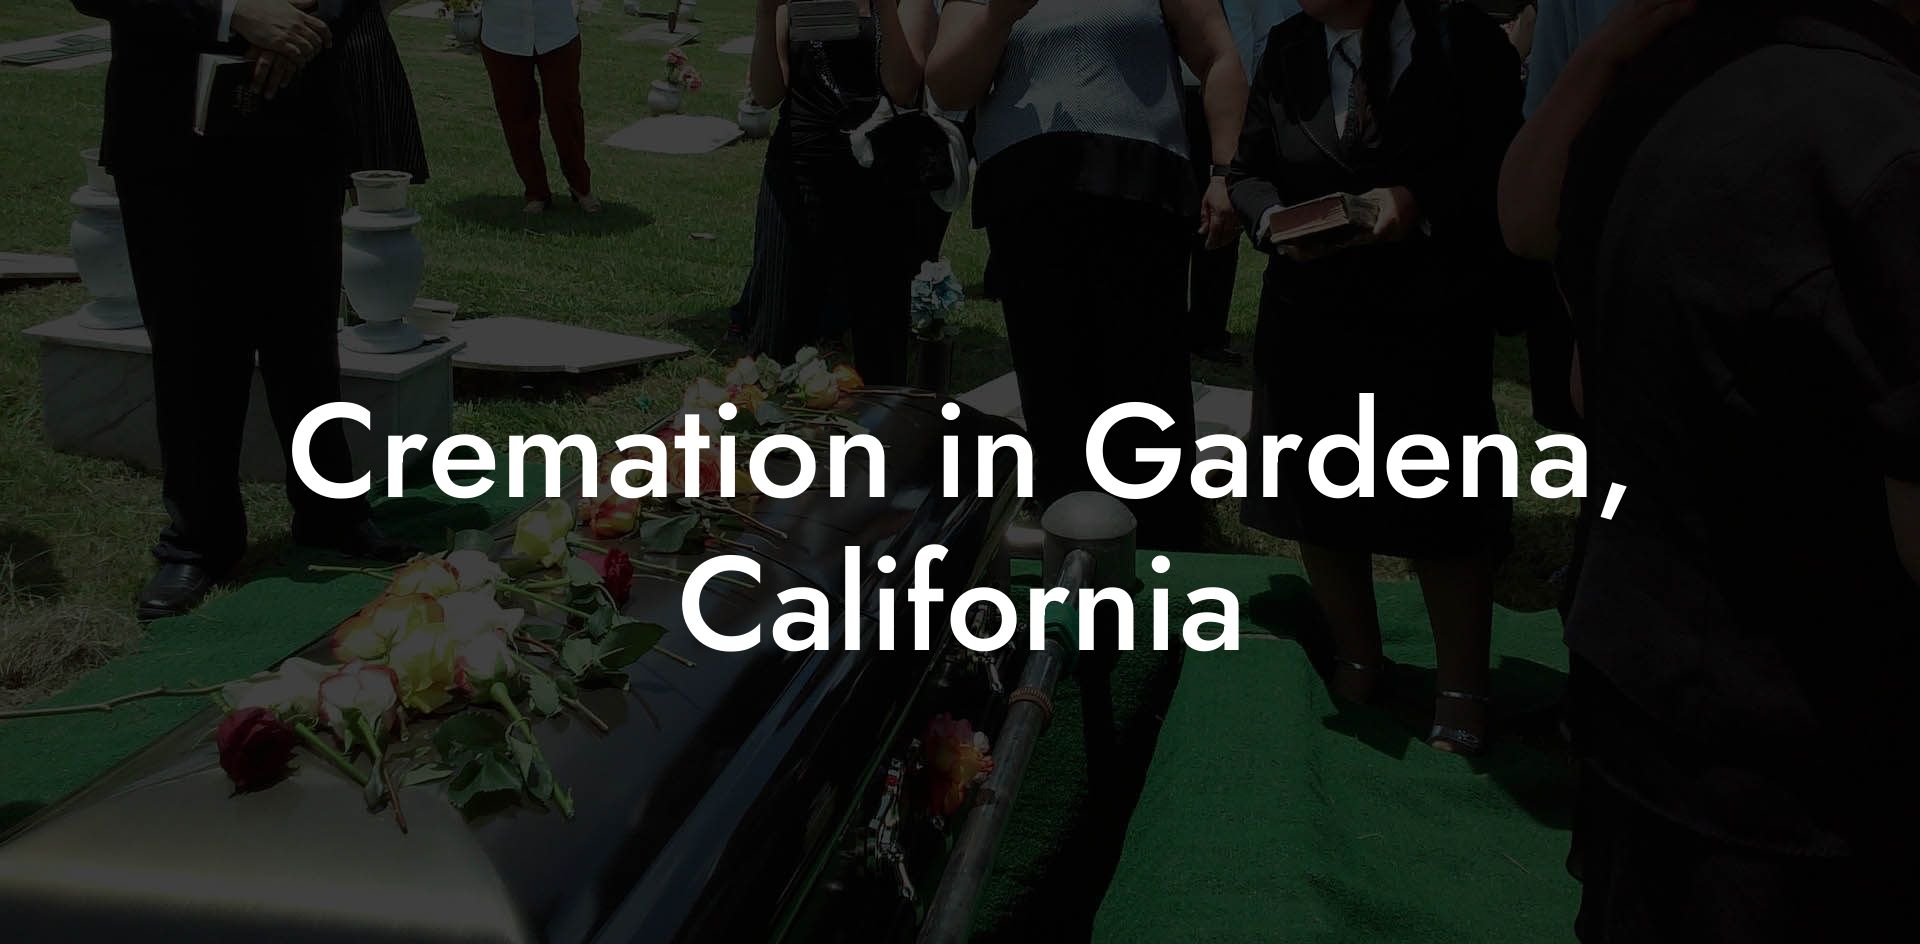 Cremation in Gardena, California